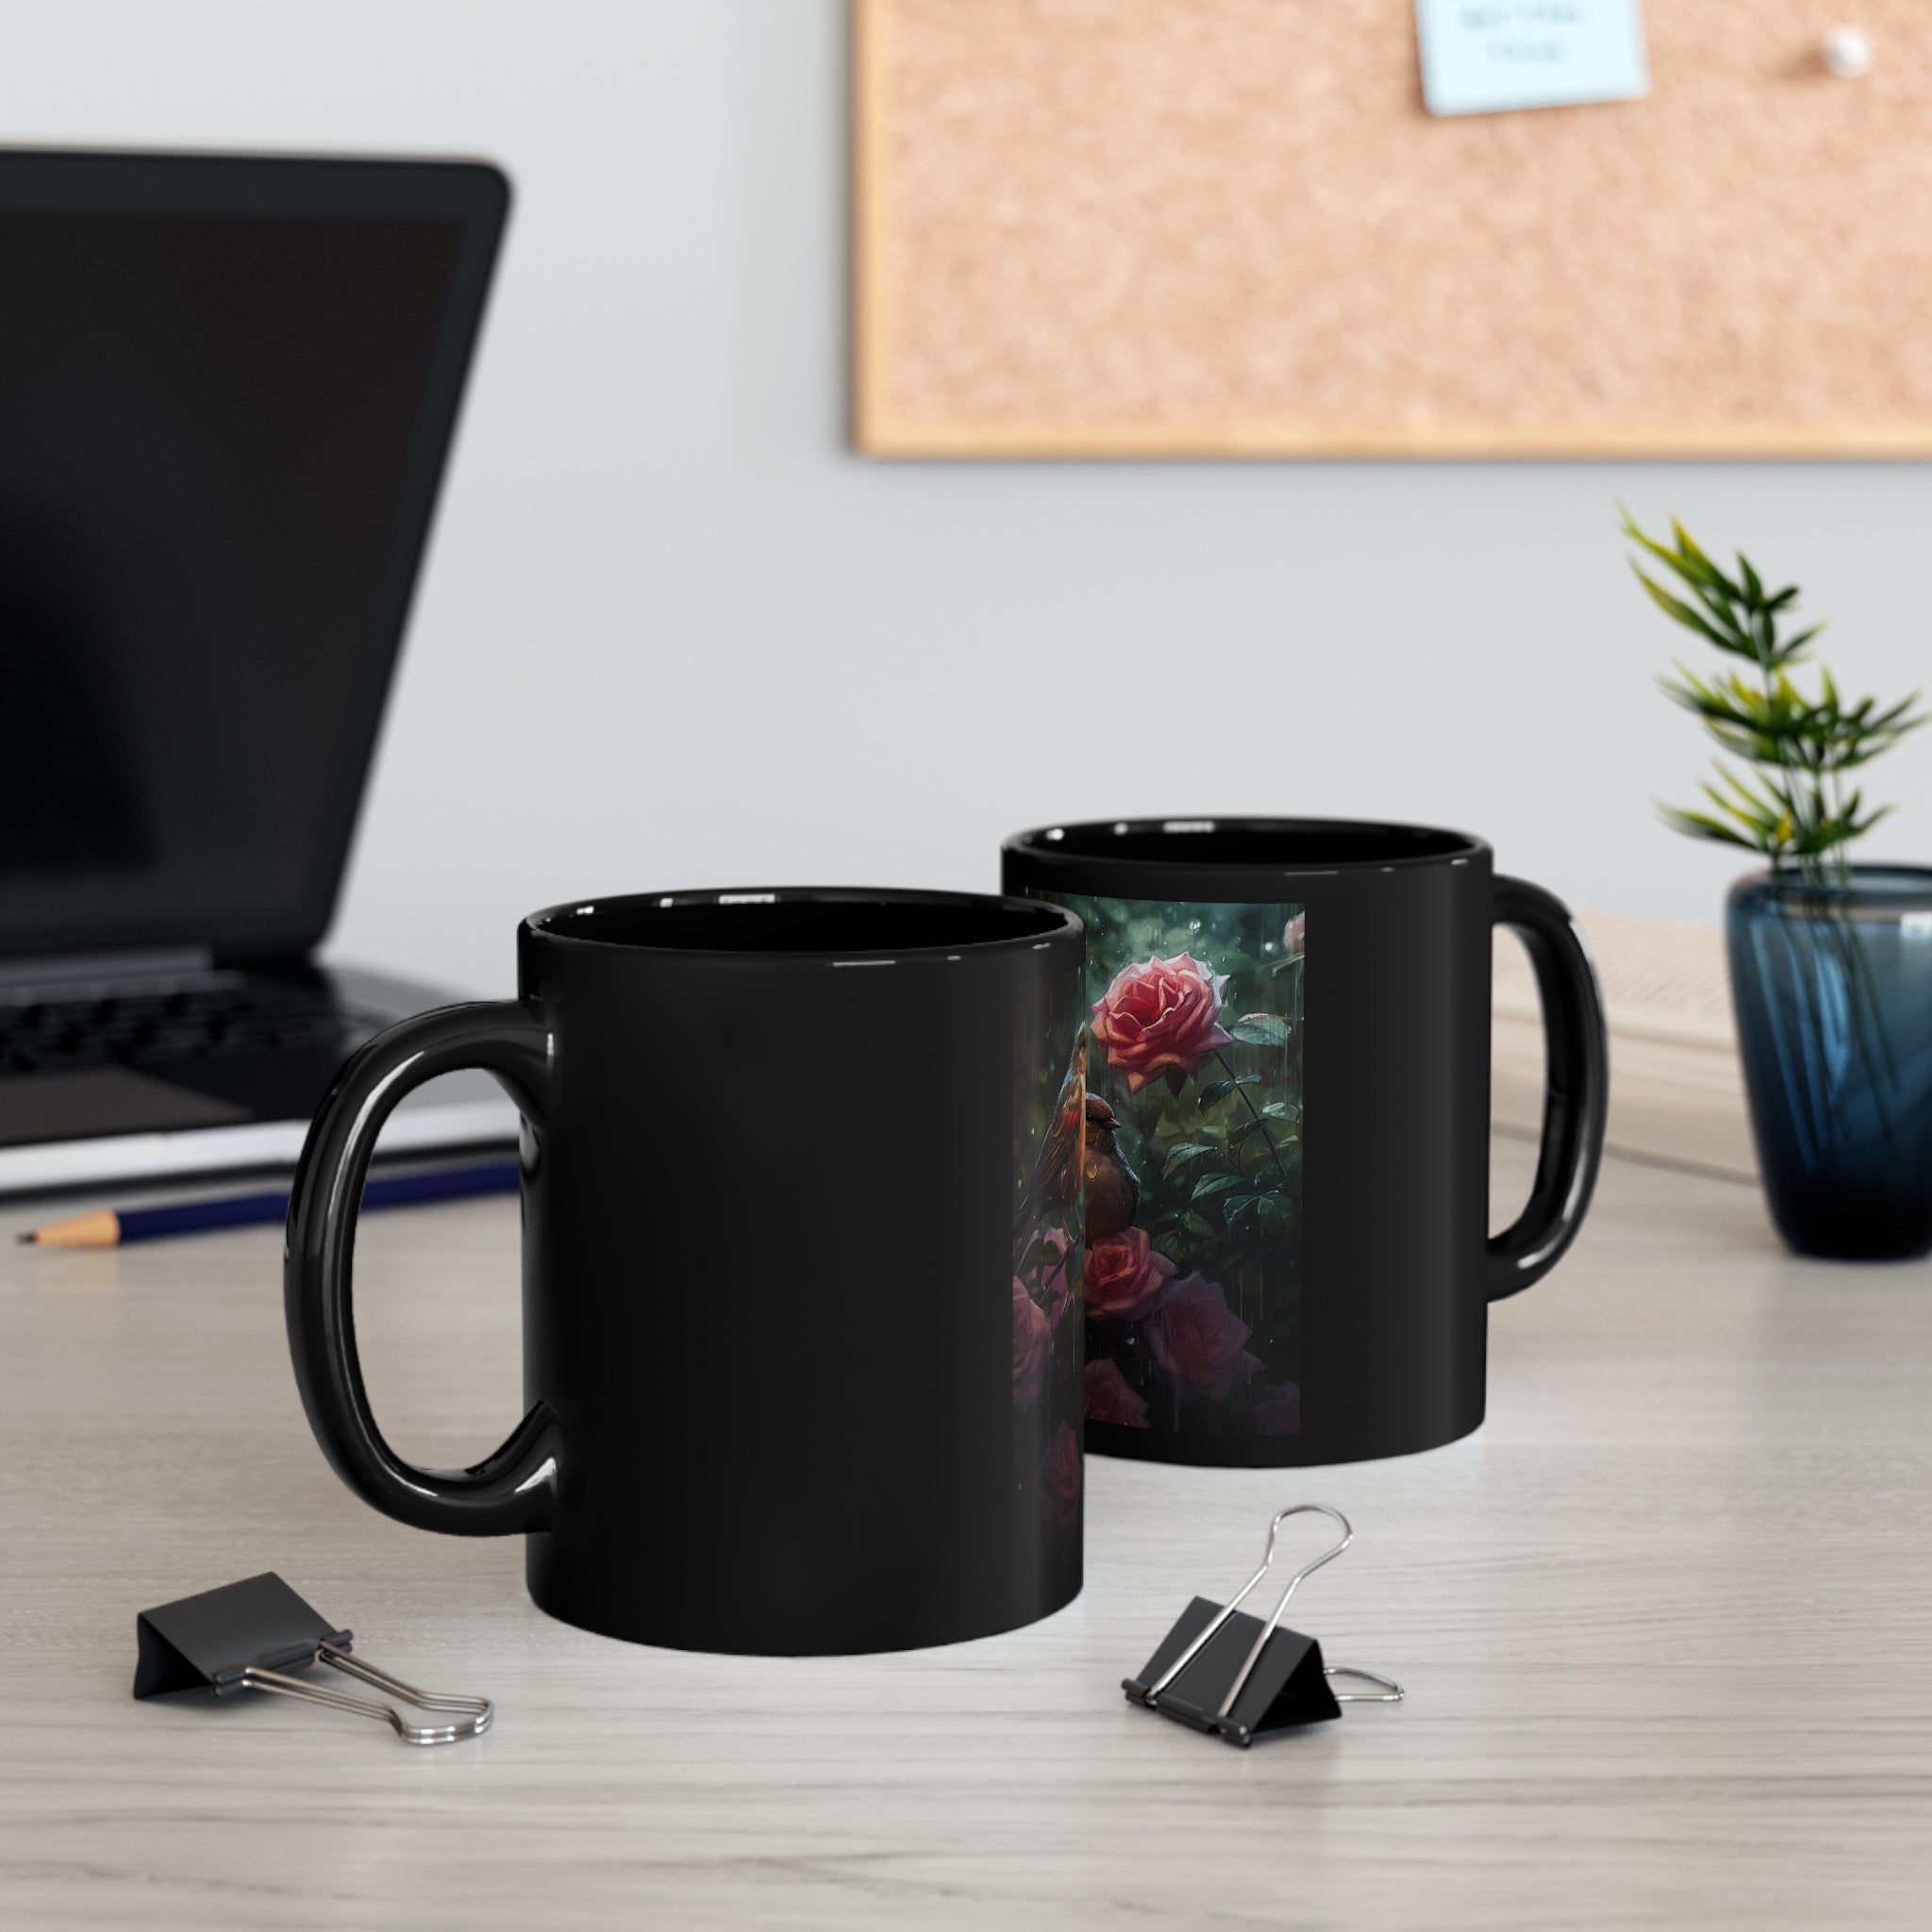 11oz Black Mug Sparrows Birds in Rose Flower Bush Ceramic "Cawfee" Floral Cup Gift Black Mug Coffee Cup Gift